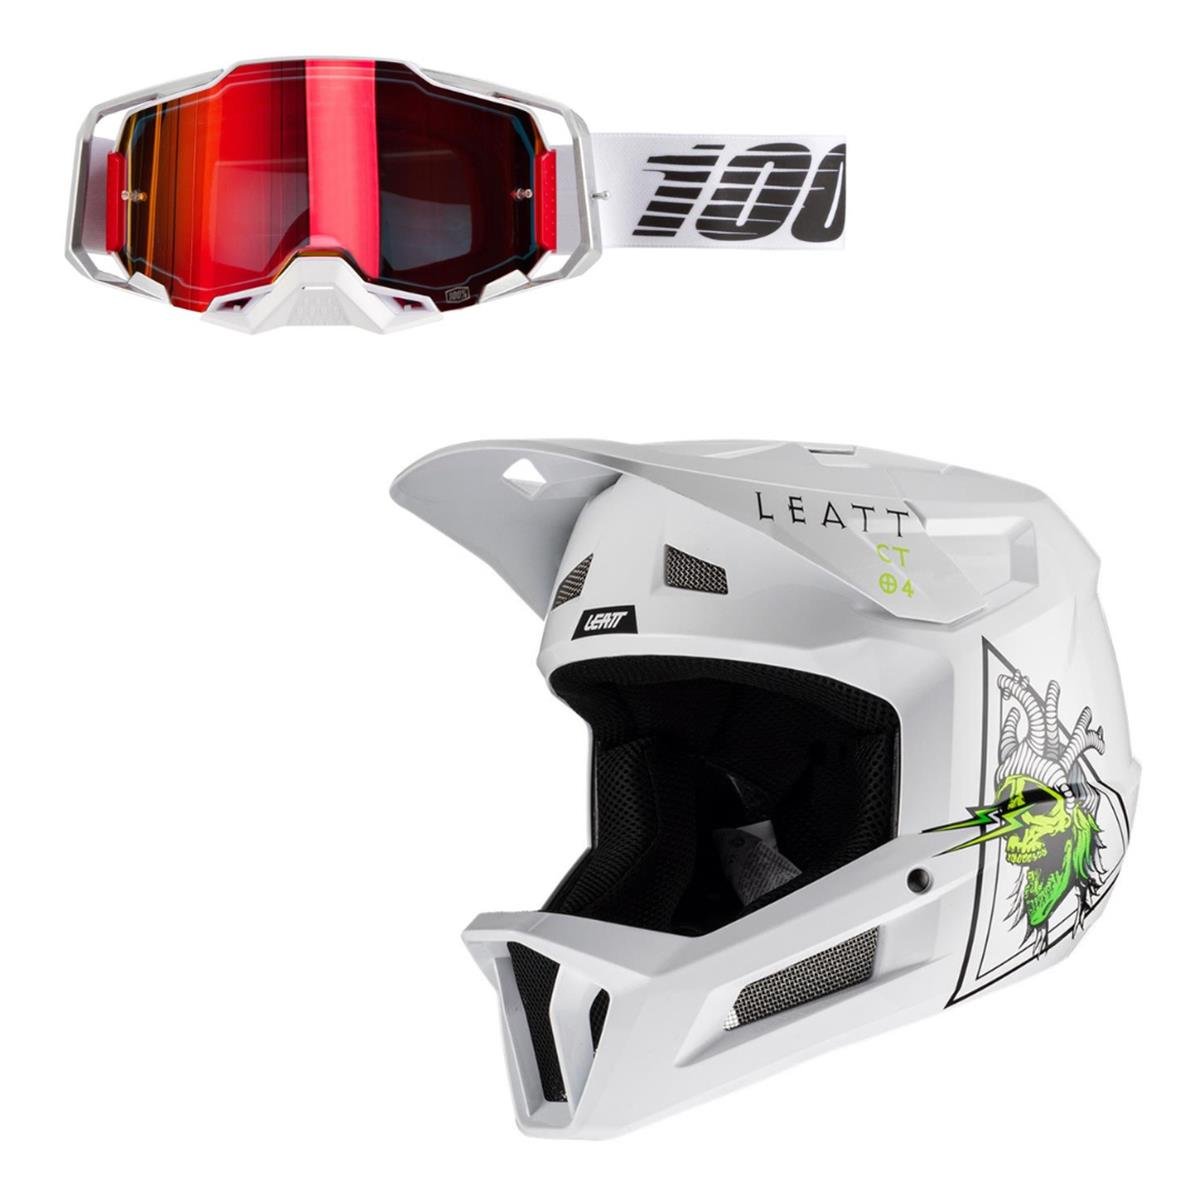 Leatt Downhill Helmet Kit 2.0 Gravity / Armega Set: 2 pieces, Zombie, Lightsaber - Mirror, Anti Fog